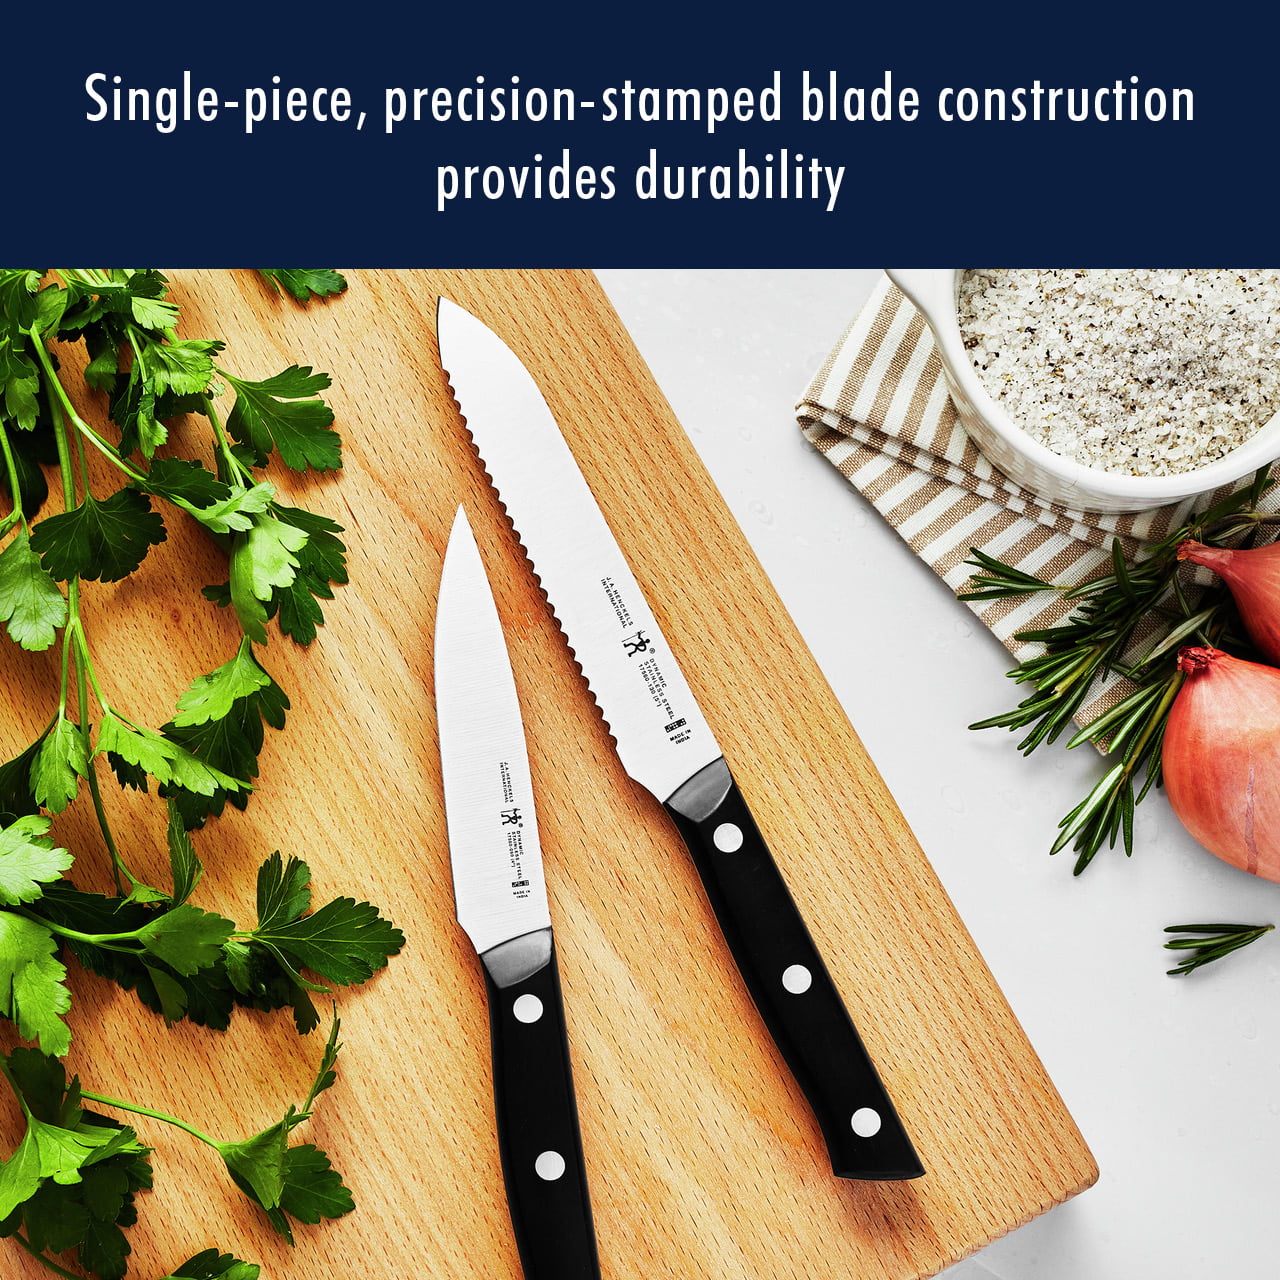  Vvwgkpk 12-Piece Kitchen Knife Set with Wooden Block